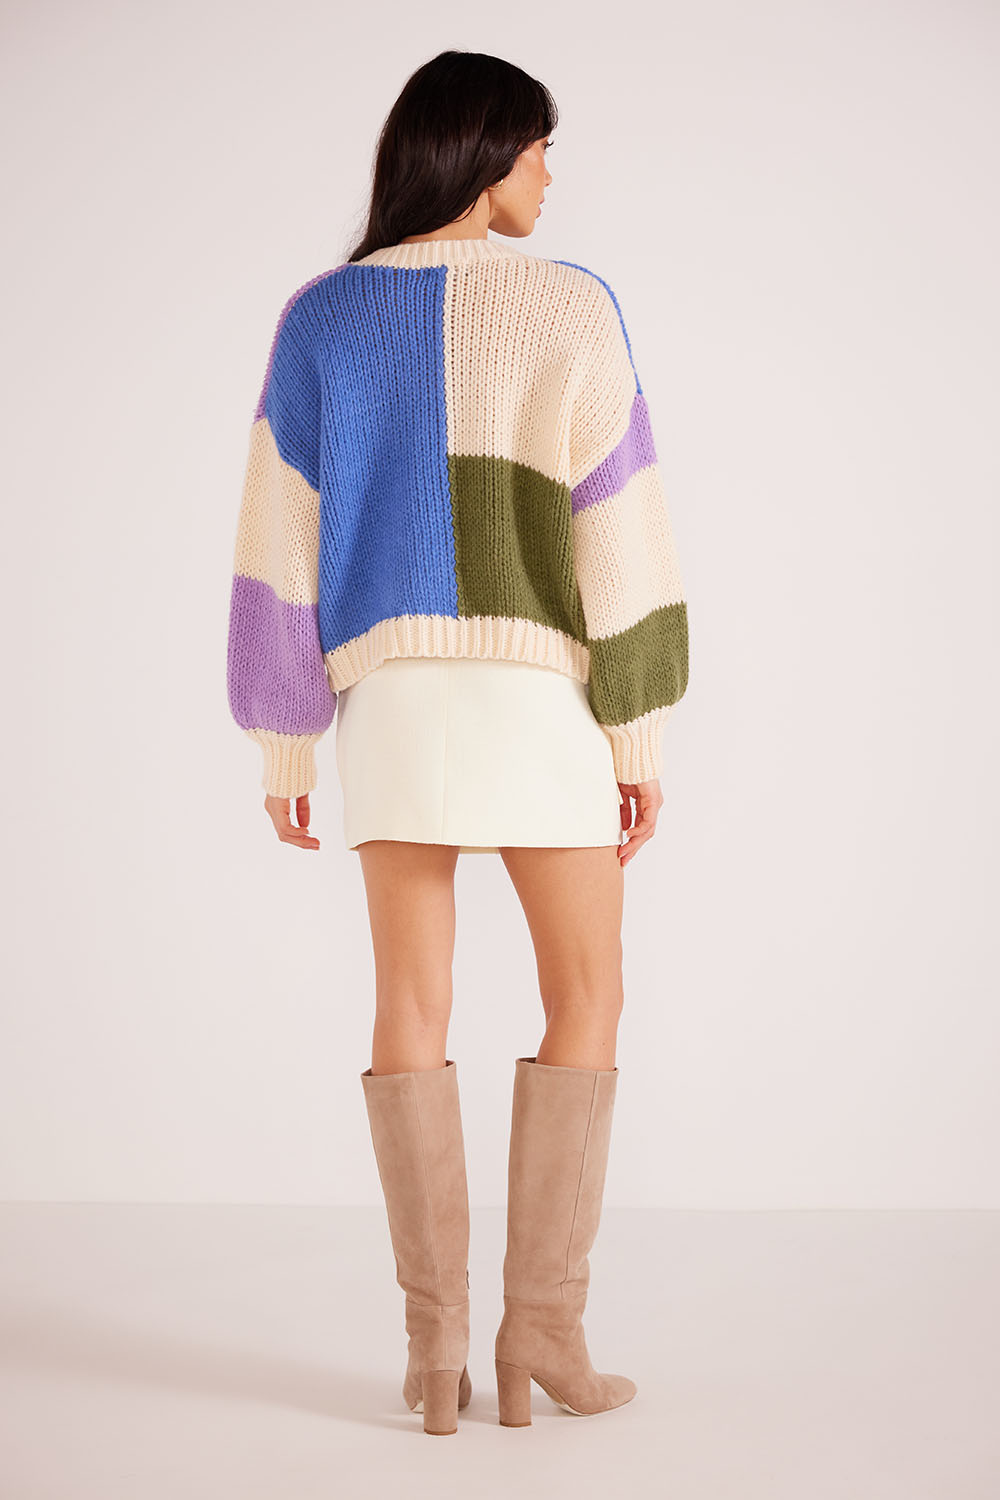 Mink Pink - Lawrence Knit Sweater - Multi Color Block - Back